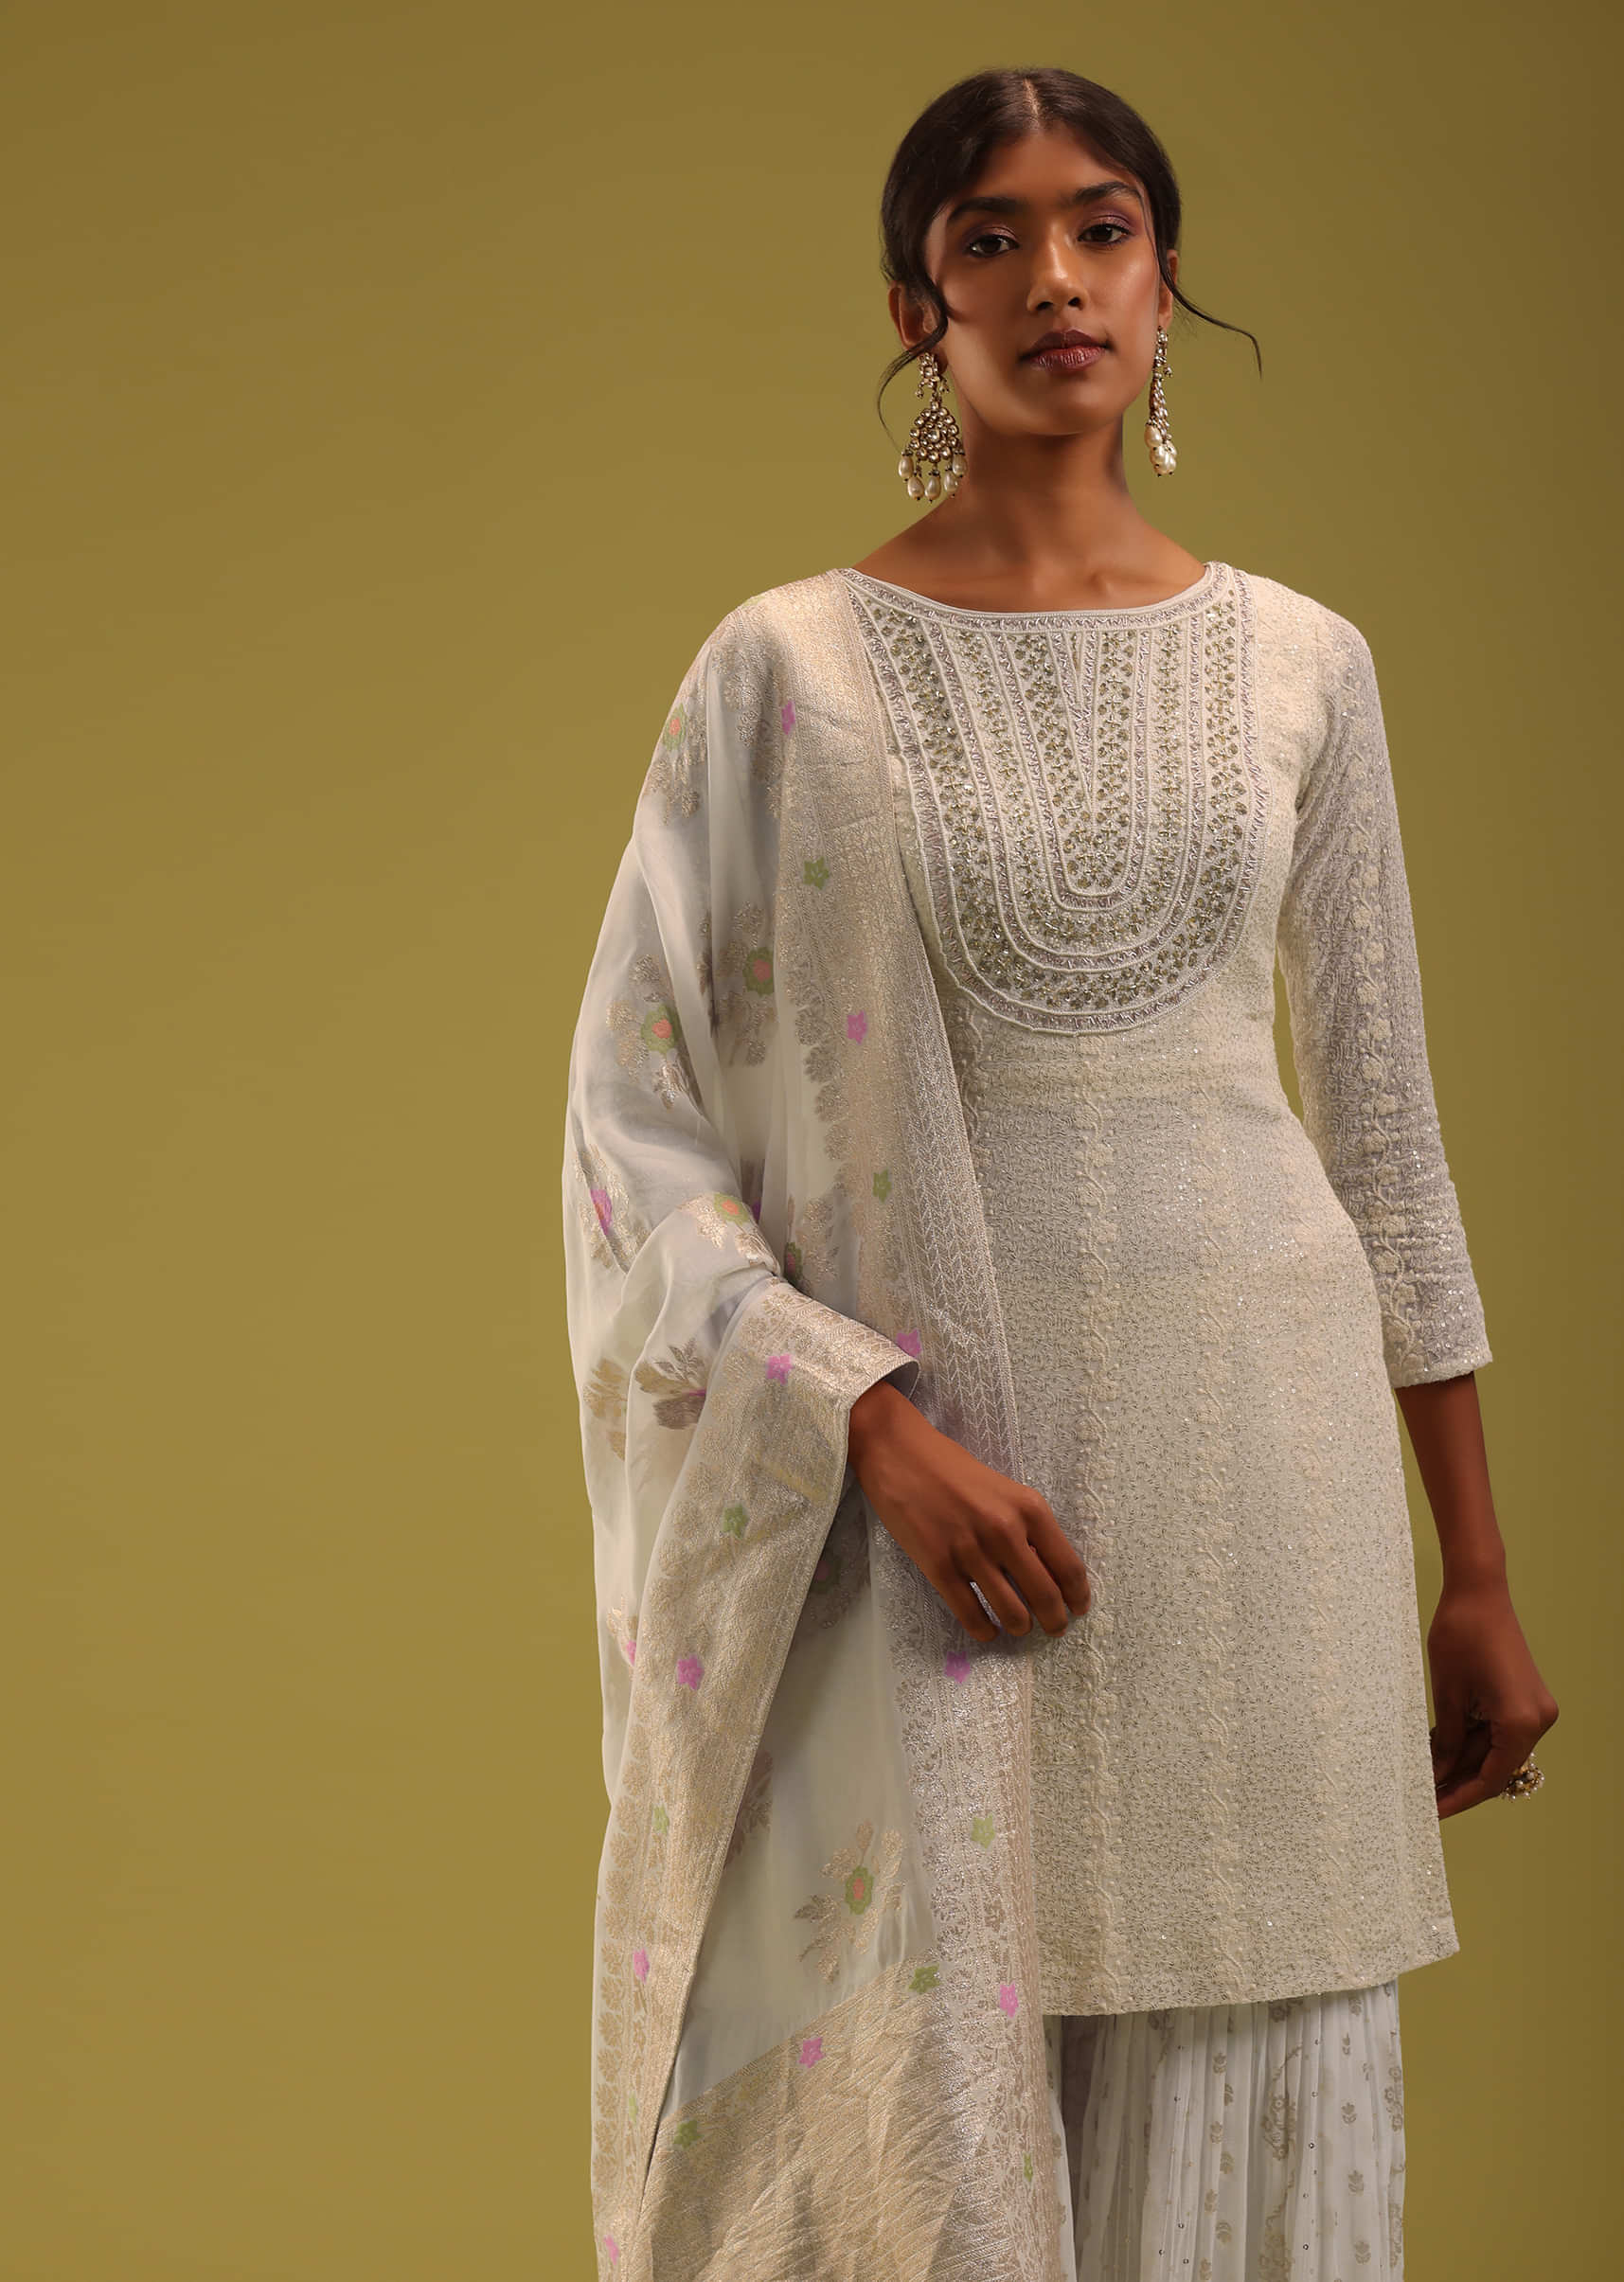 Buy Lakhnavi Fabrics Women's White Casual Lucknowi Chikan Kurta at Amazon.in